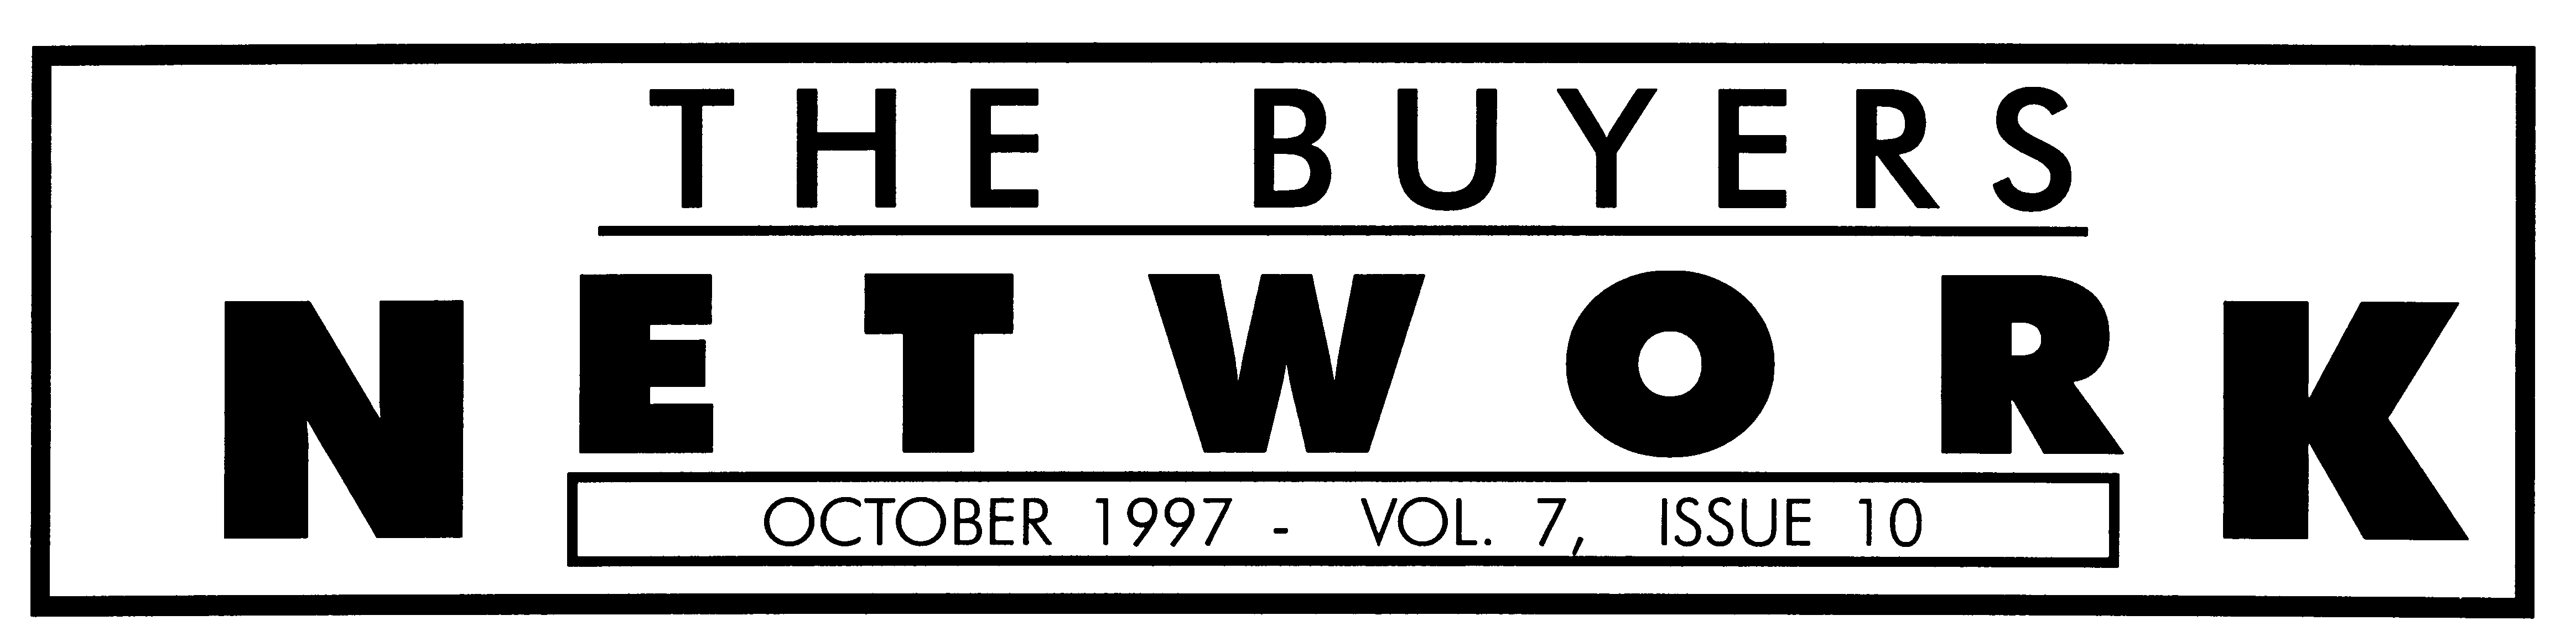 The Buyers Network October 1997